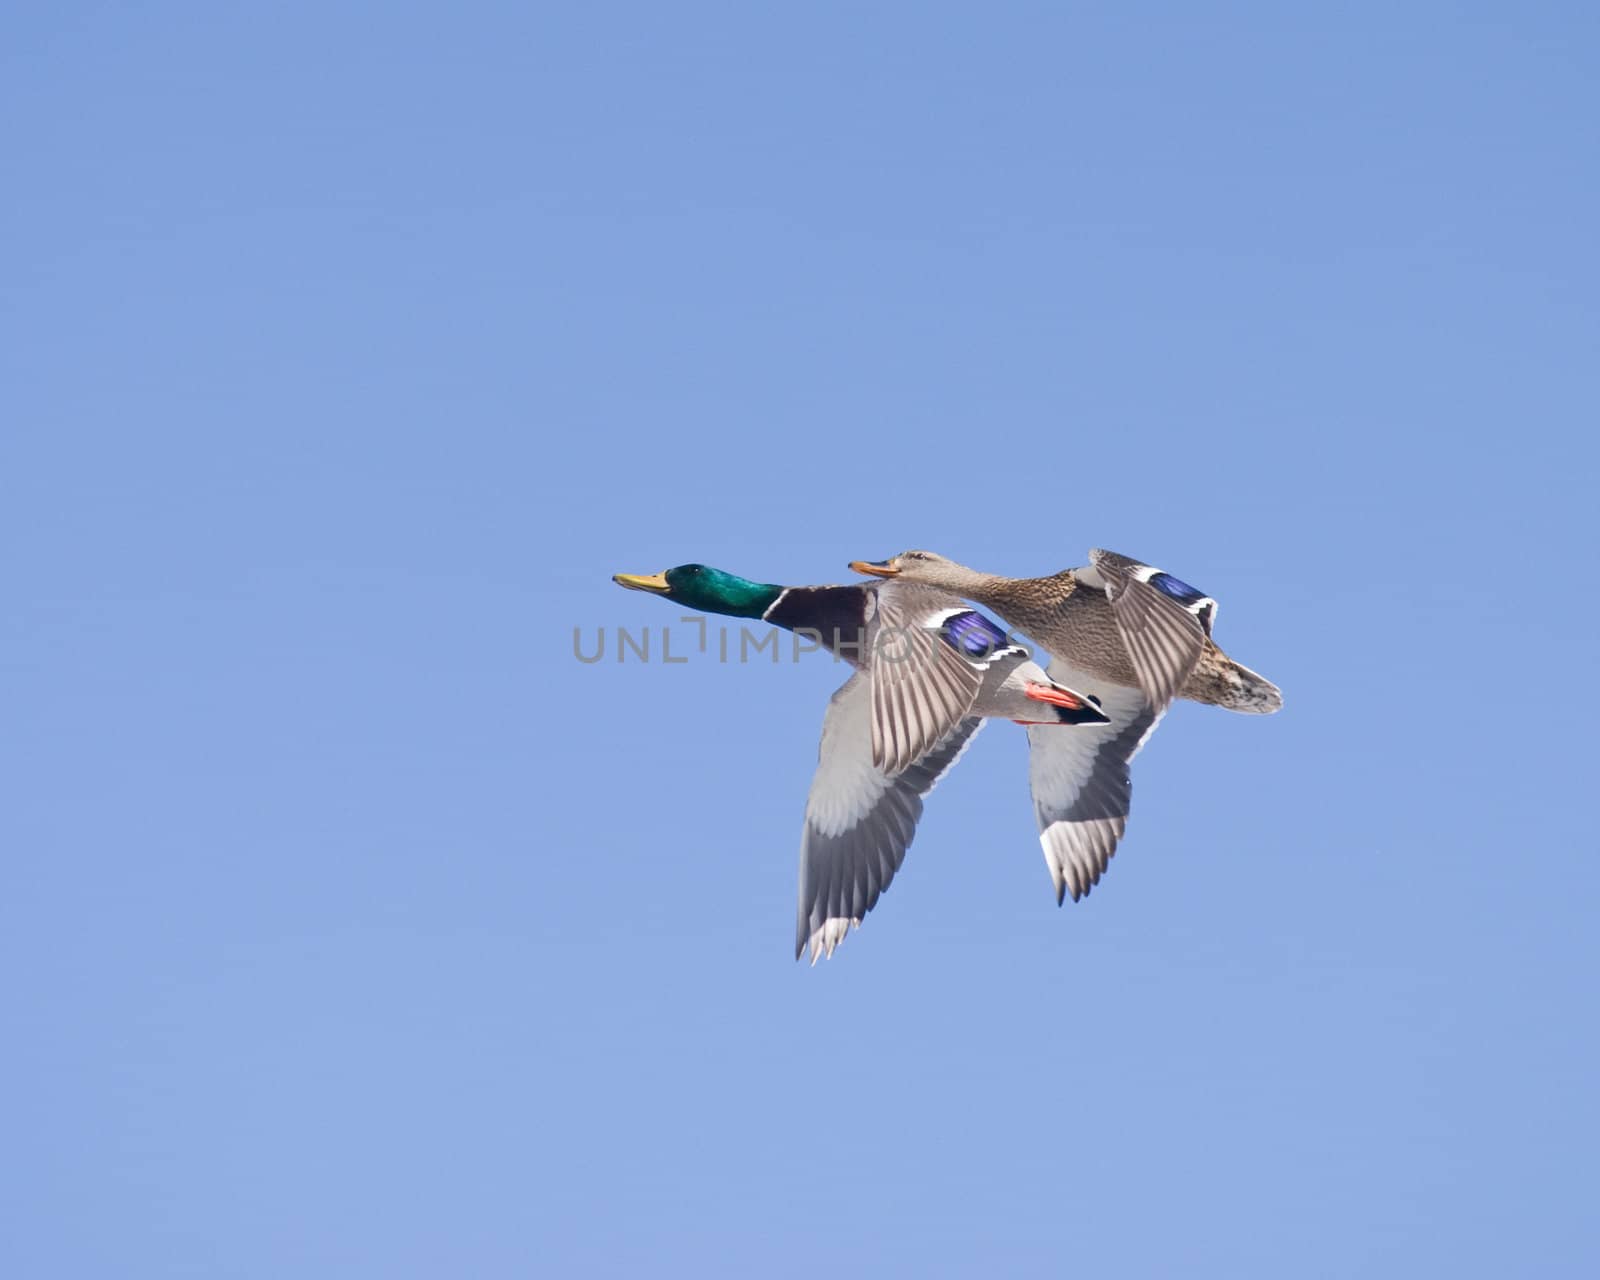 two ducks in flight over a blue colorado sky in winter